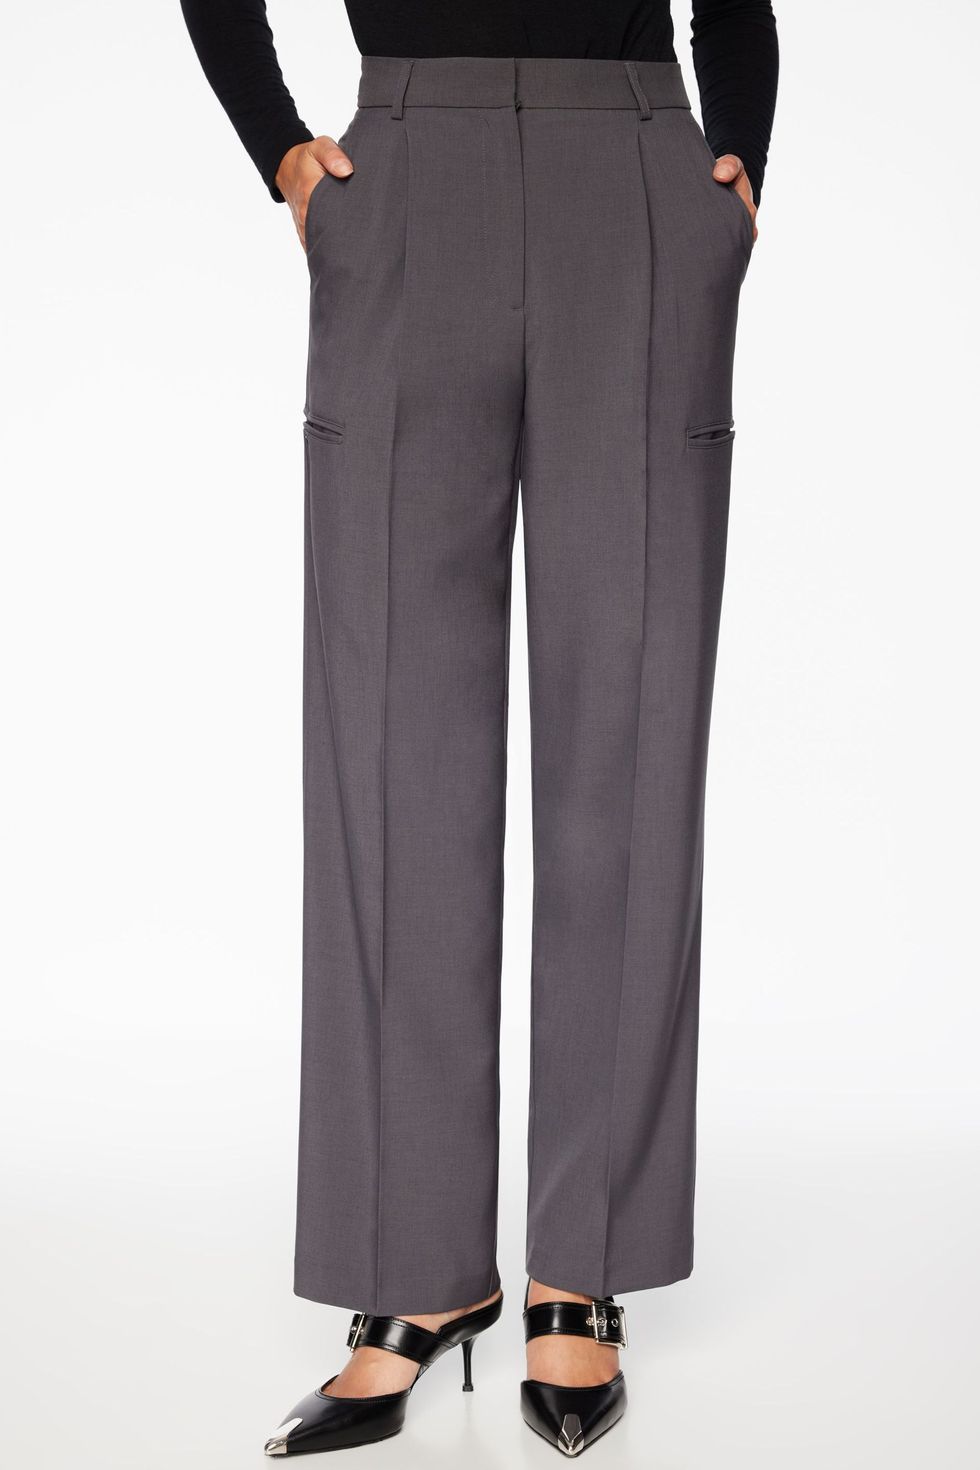 Dress Pants for Women Comfort High Waist Straight Leg Pants (Navy) Order  Online